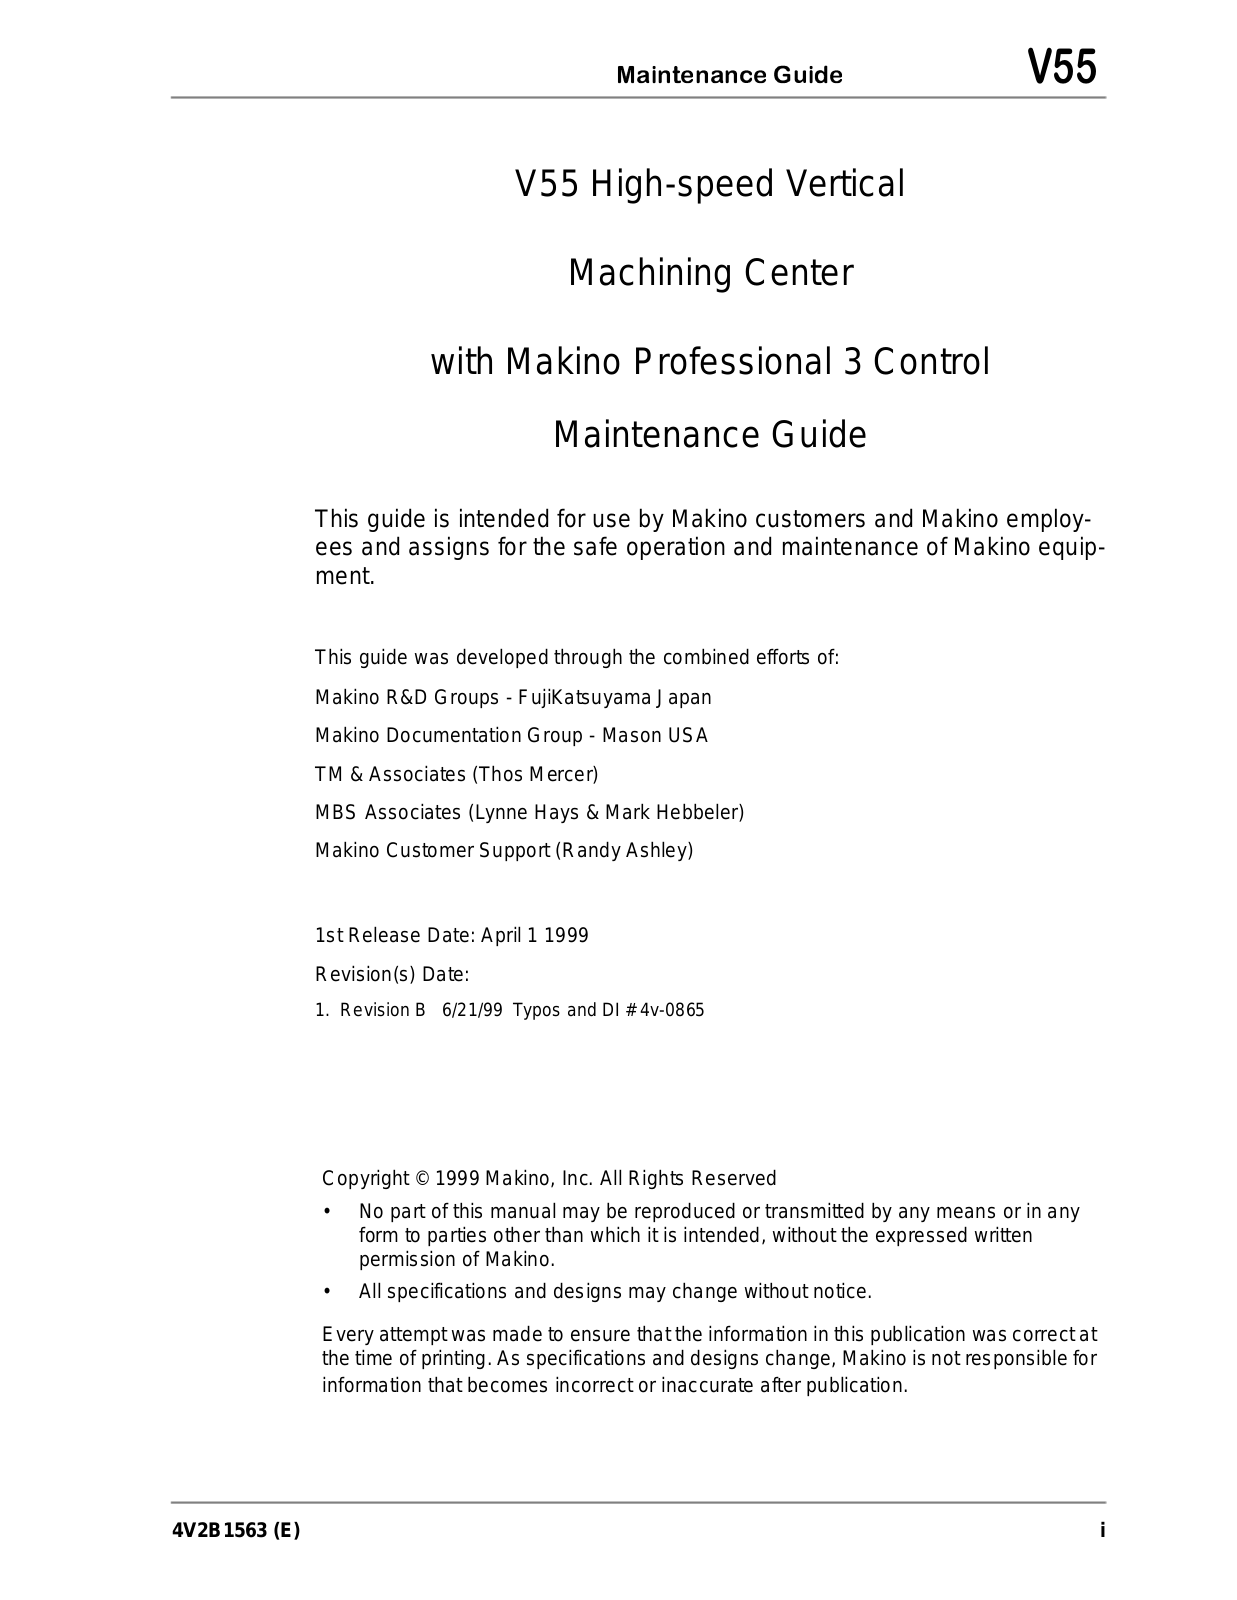 Makino V55 Maintenance Manual